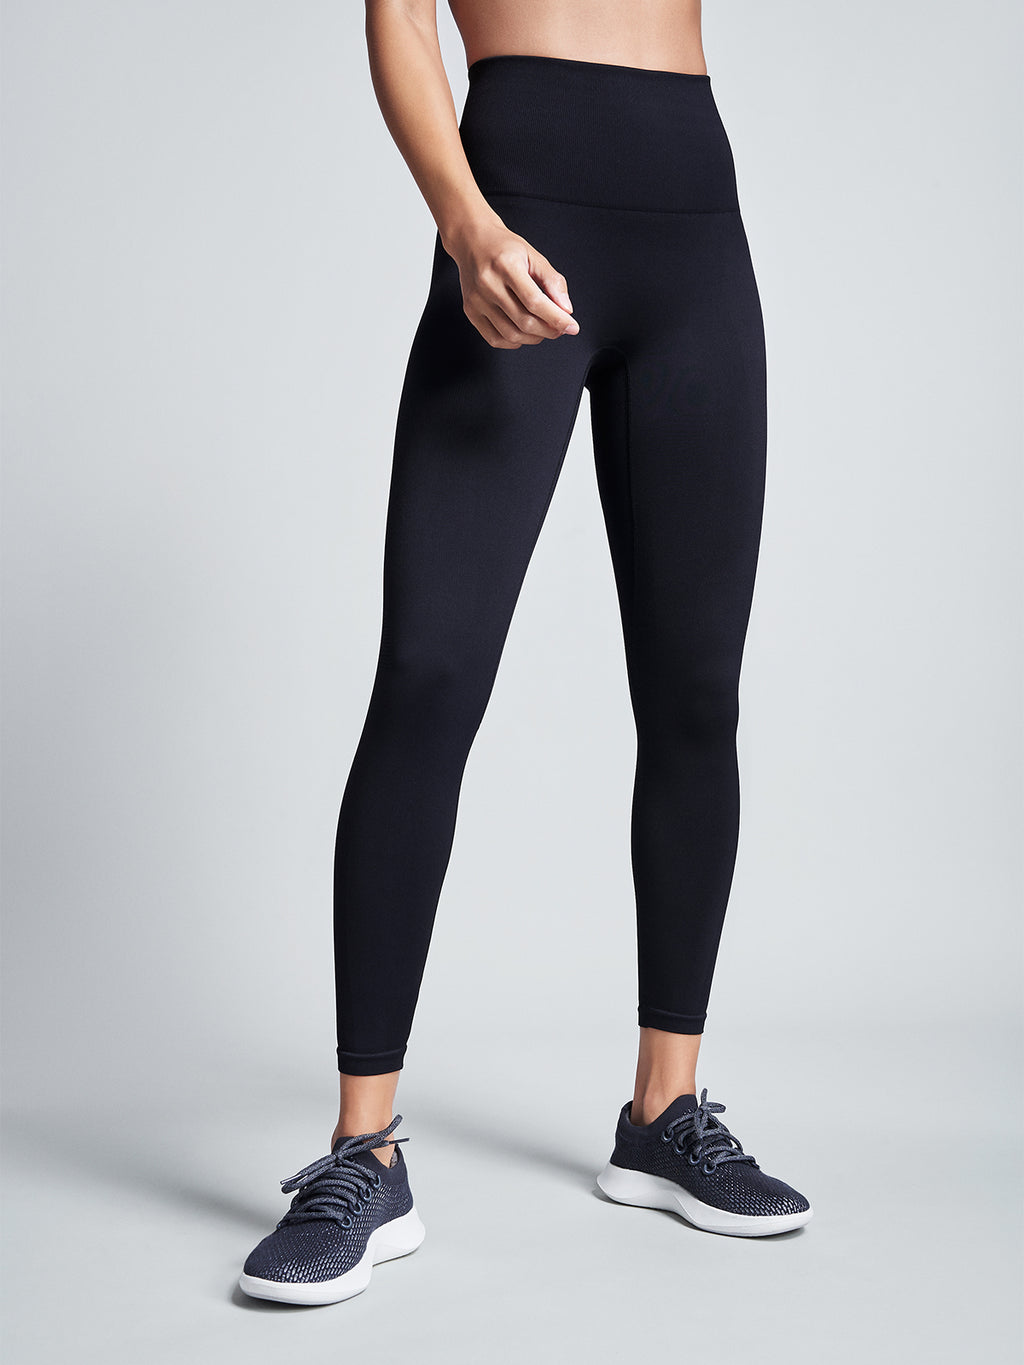 New Balance Soft Size S Heather Gray Black Legging Capris Pants Yoga NB Dry